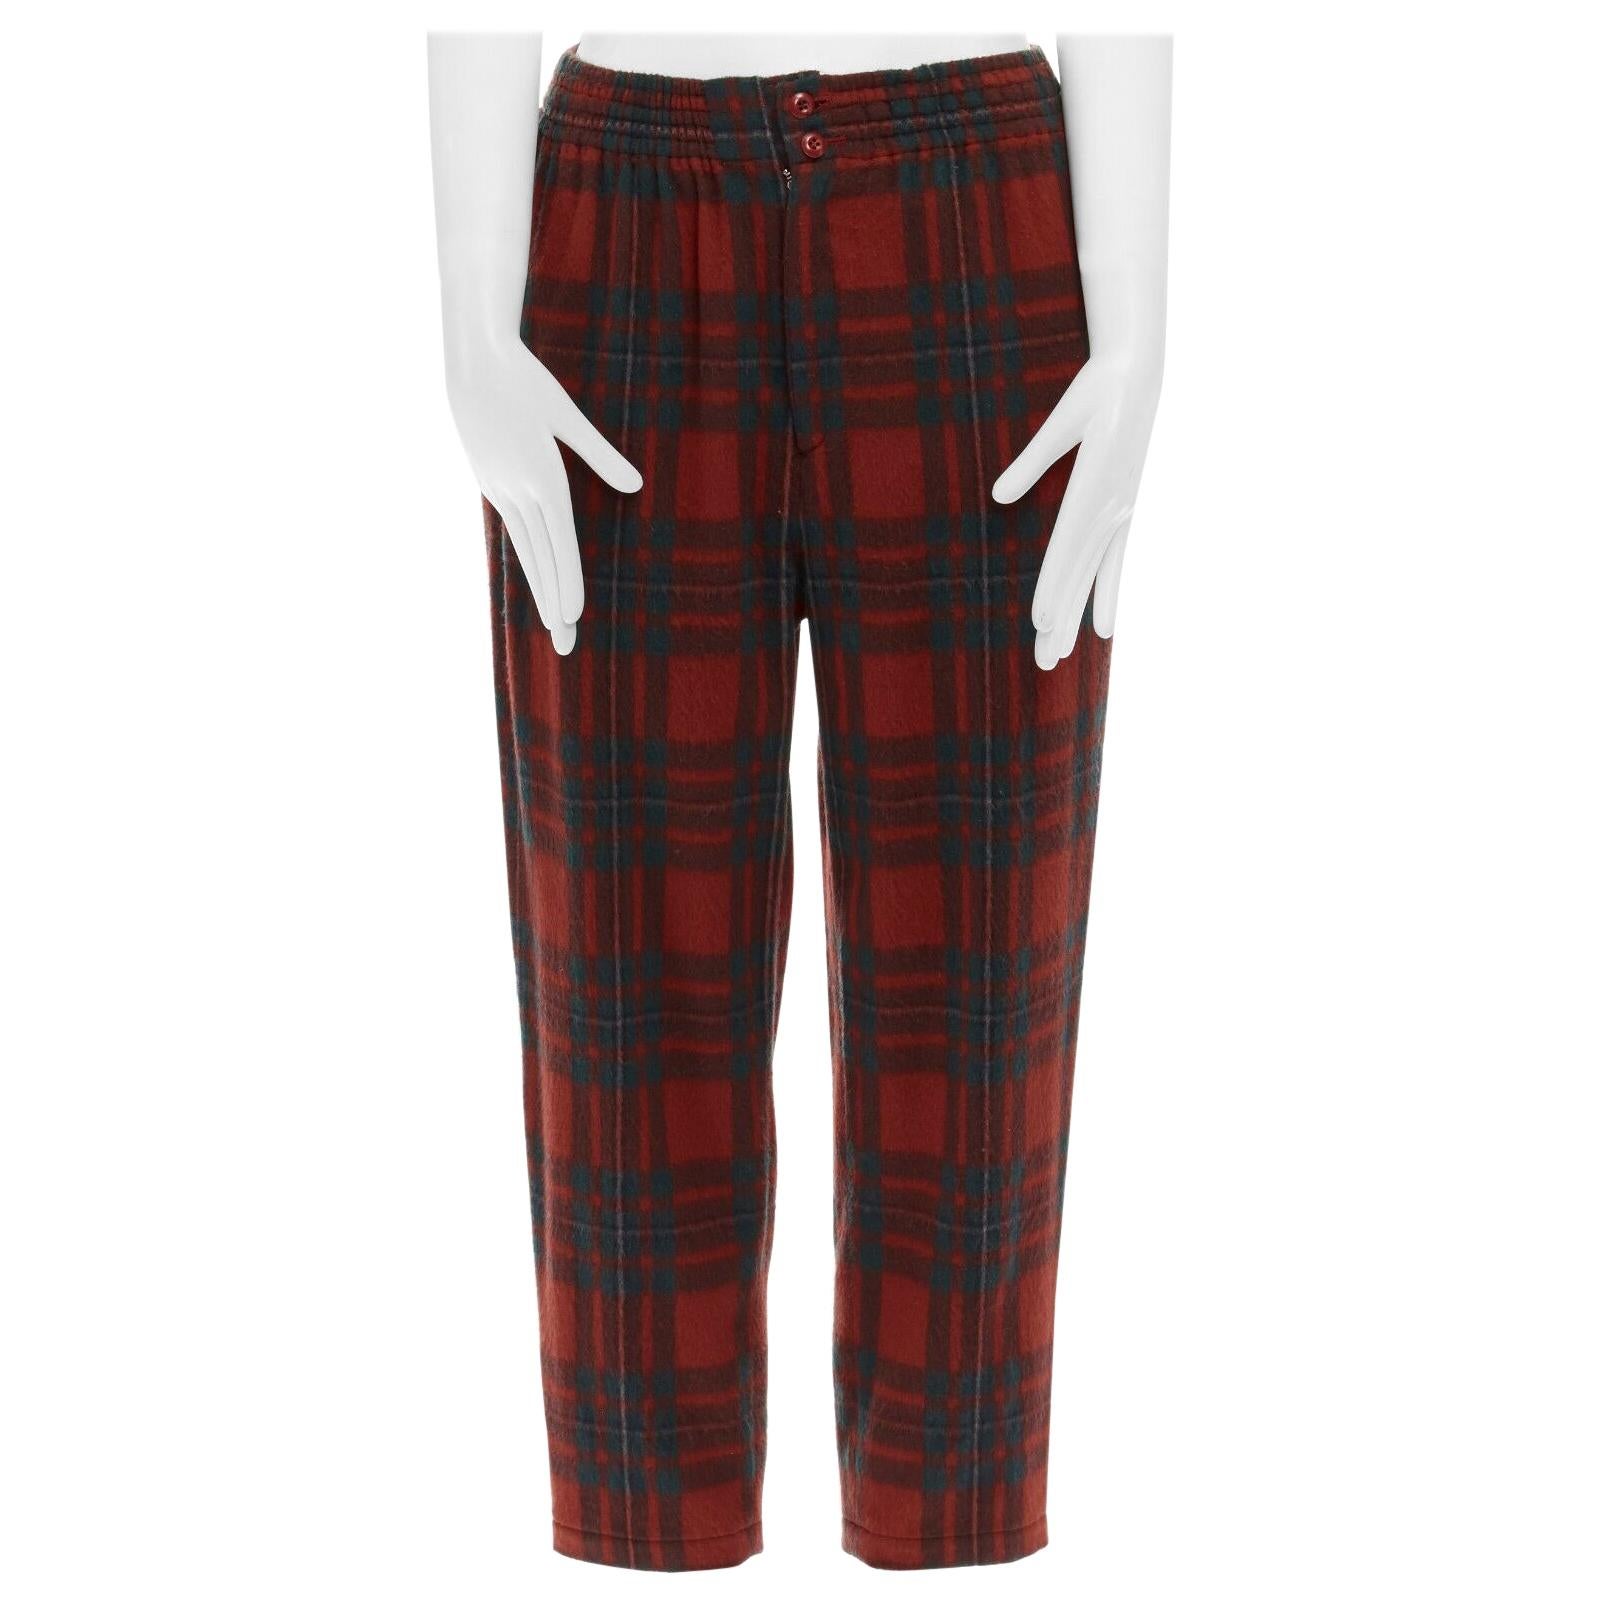 COMME DES GARCONS Vintage red plaid check wool elastic waist wide crop pants 28"